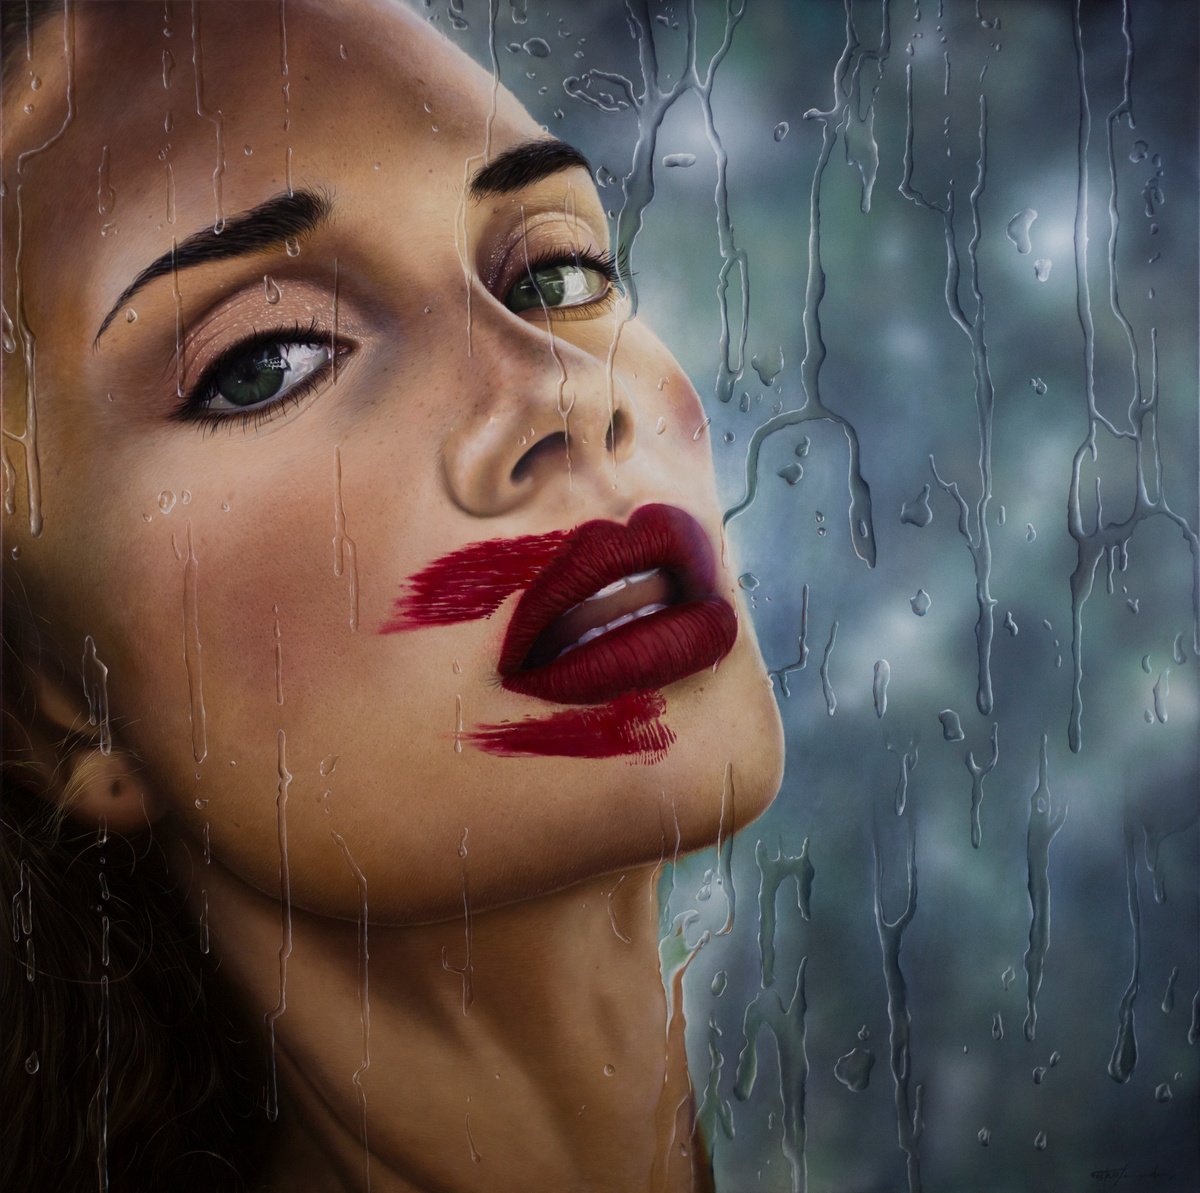 Cherry Lips by Gustavo Fernandes